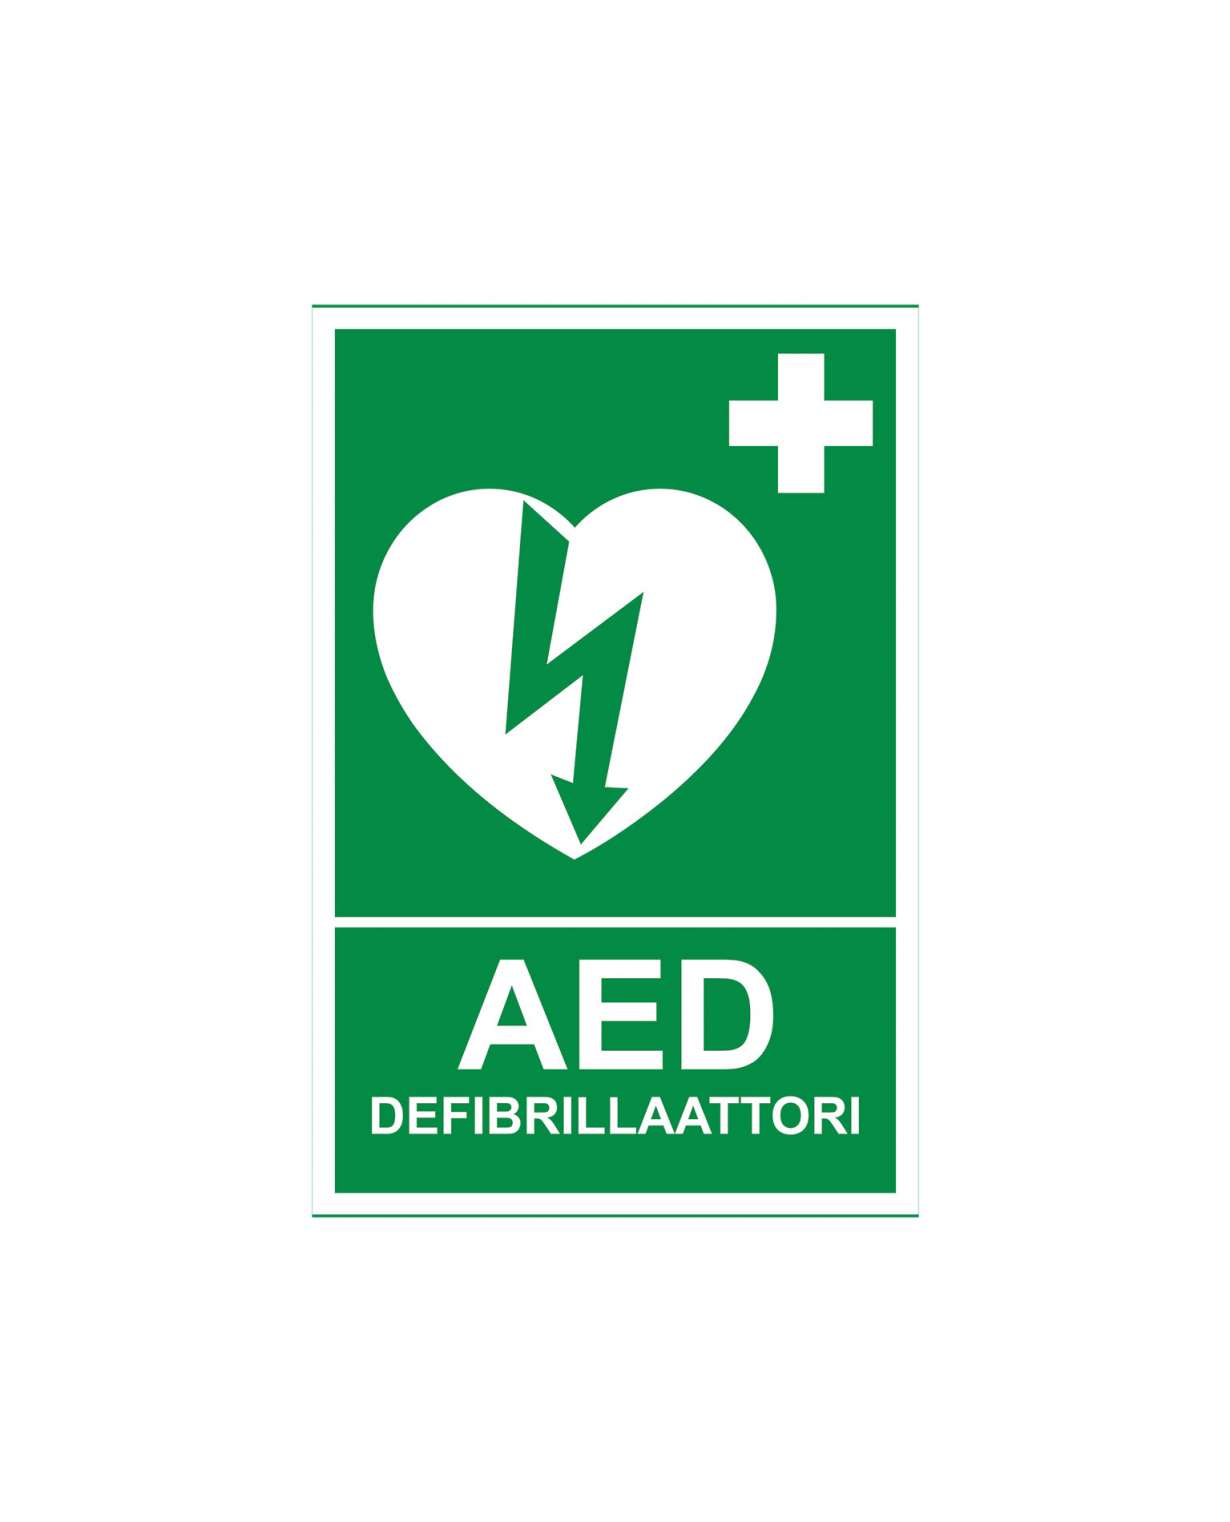 AED defibrillaattori, Tarra jälkiheijastava, 300x400 mm